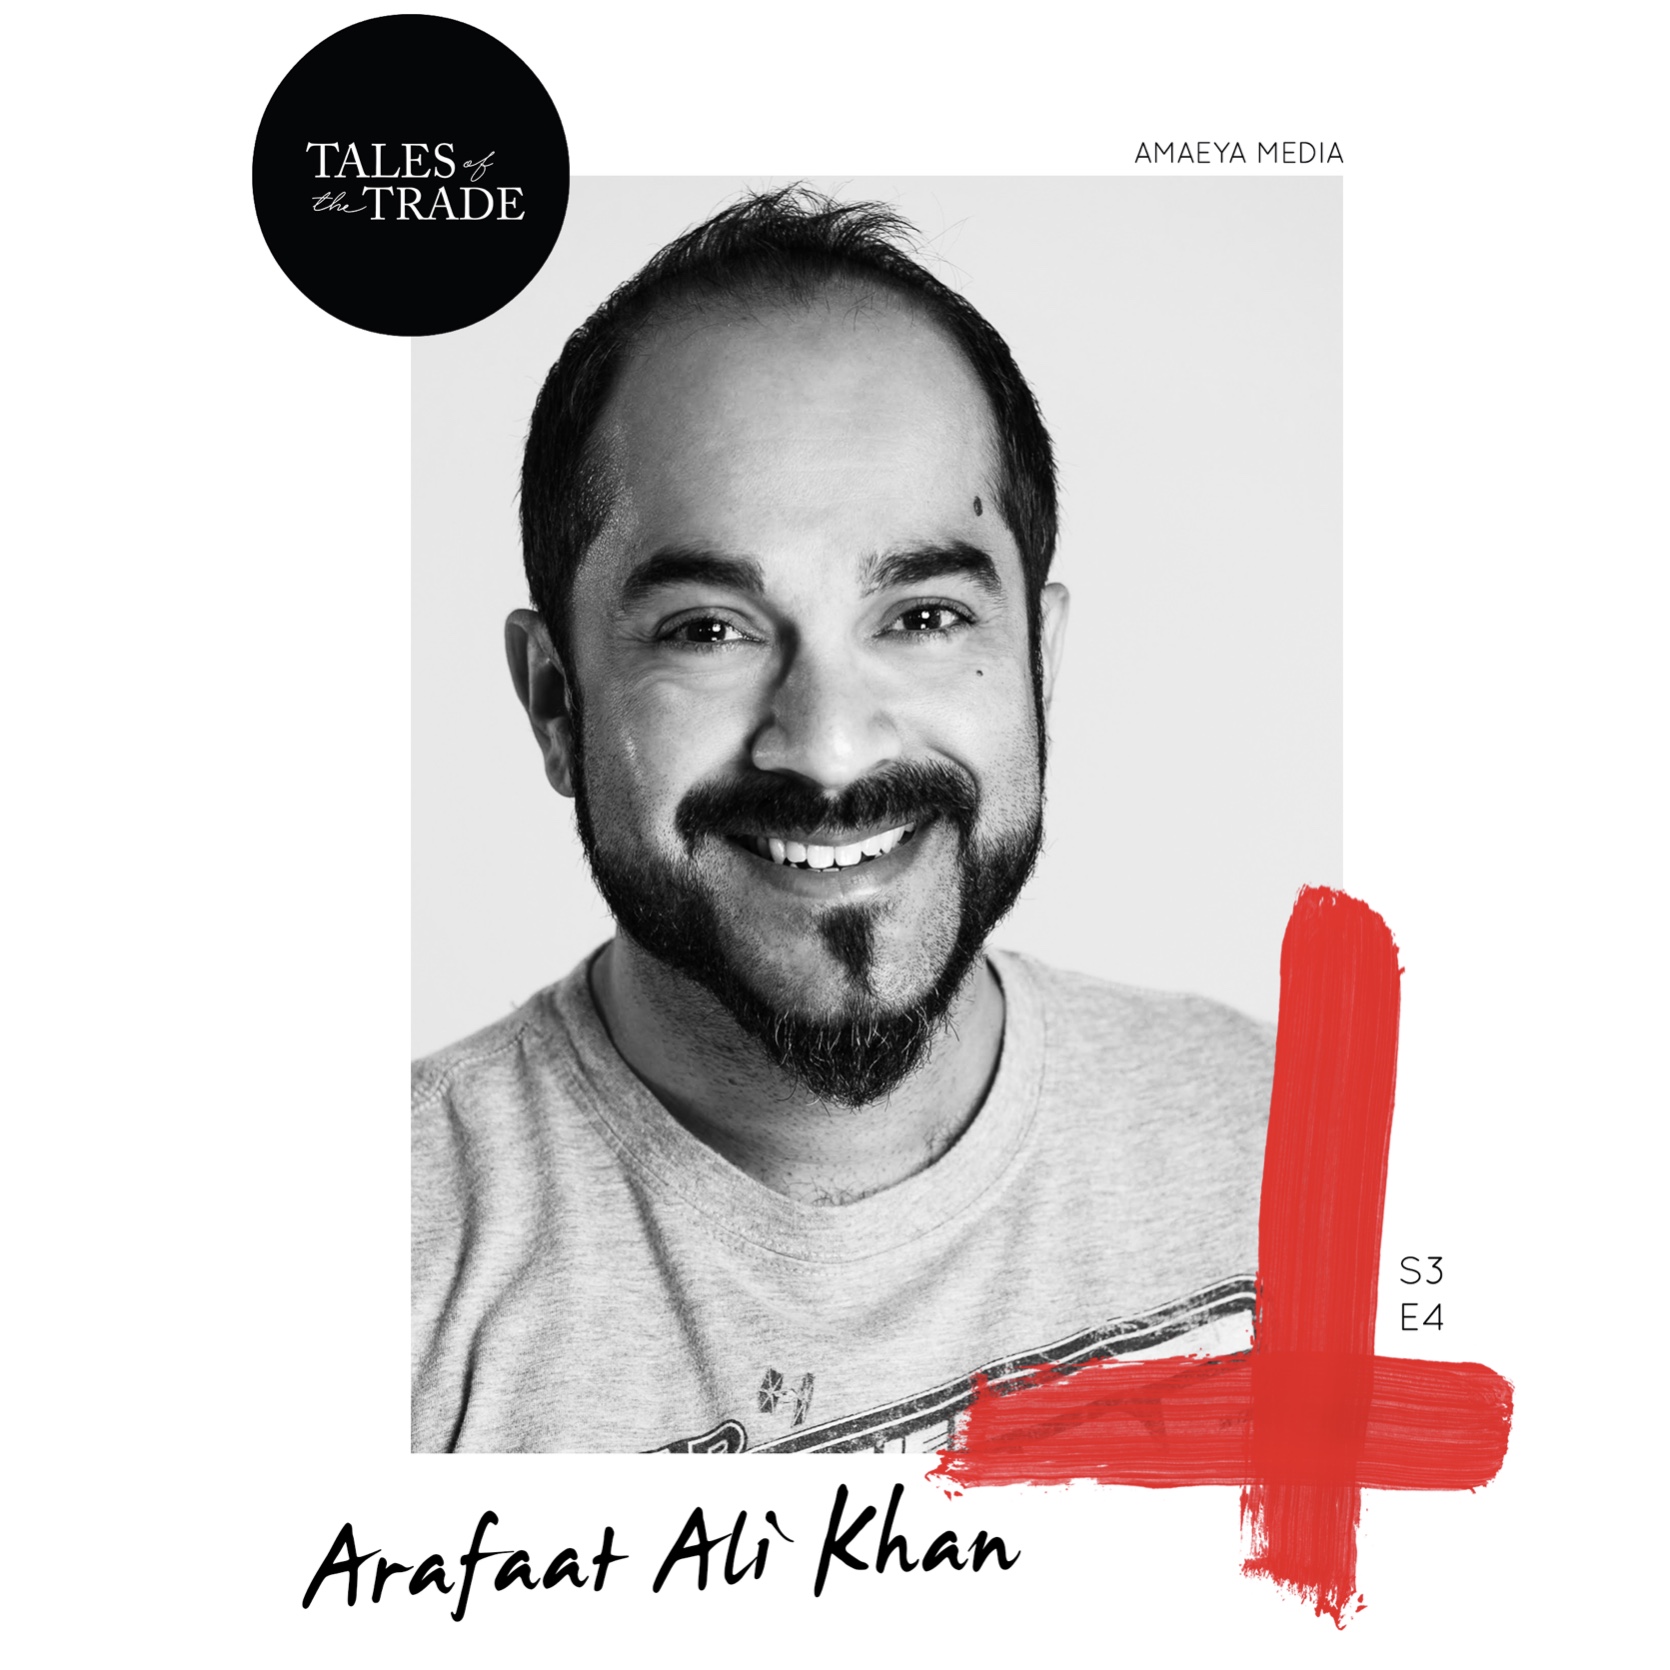 BONUS: Arafaat Ali Khan (Middle East Film & Comic Con)